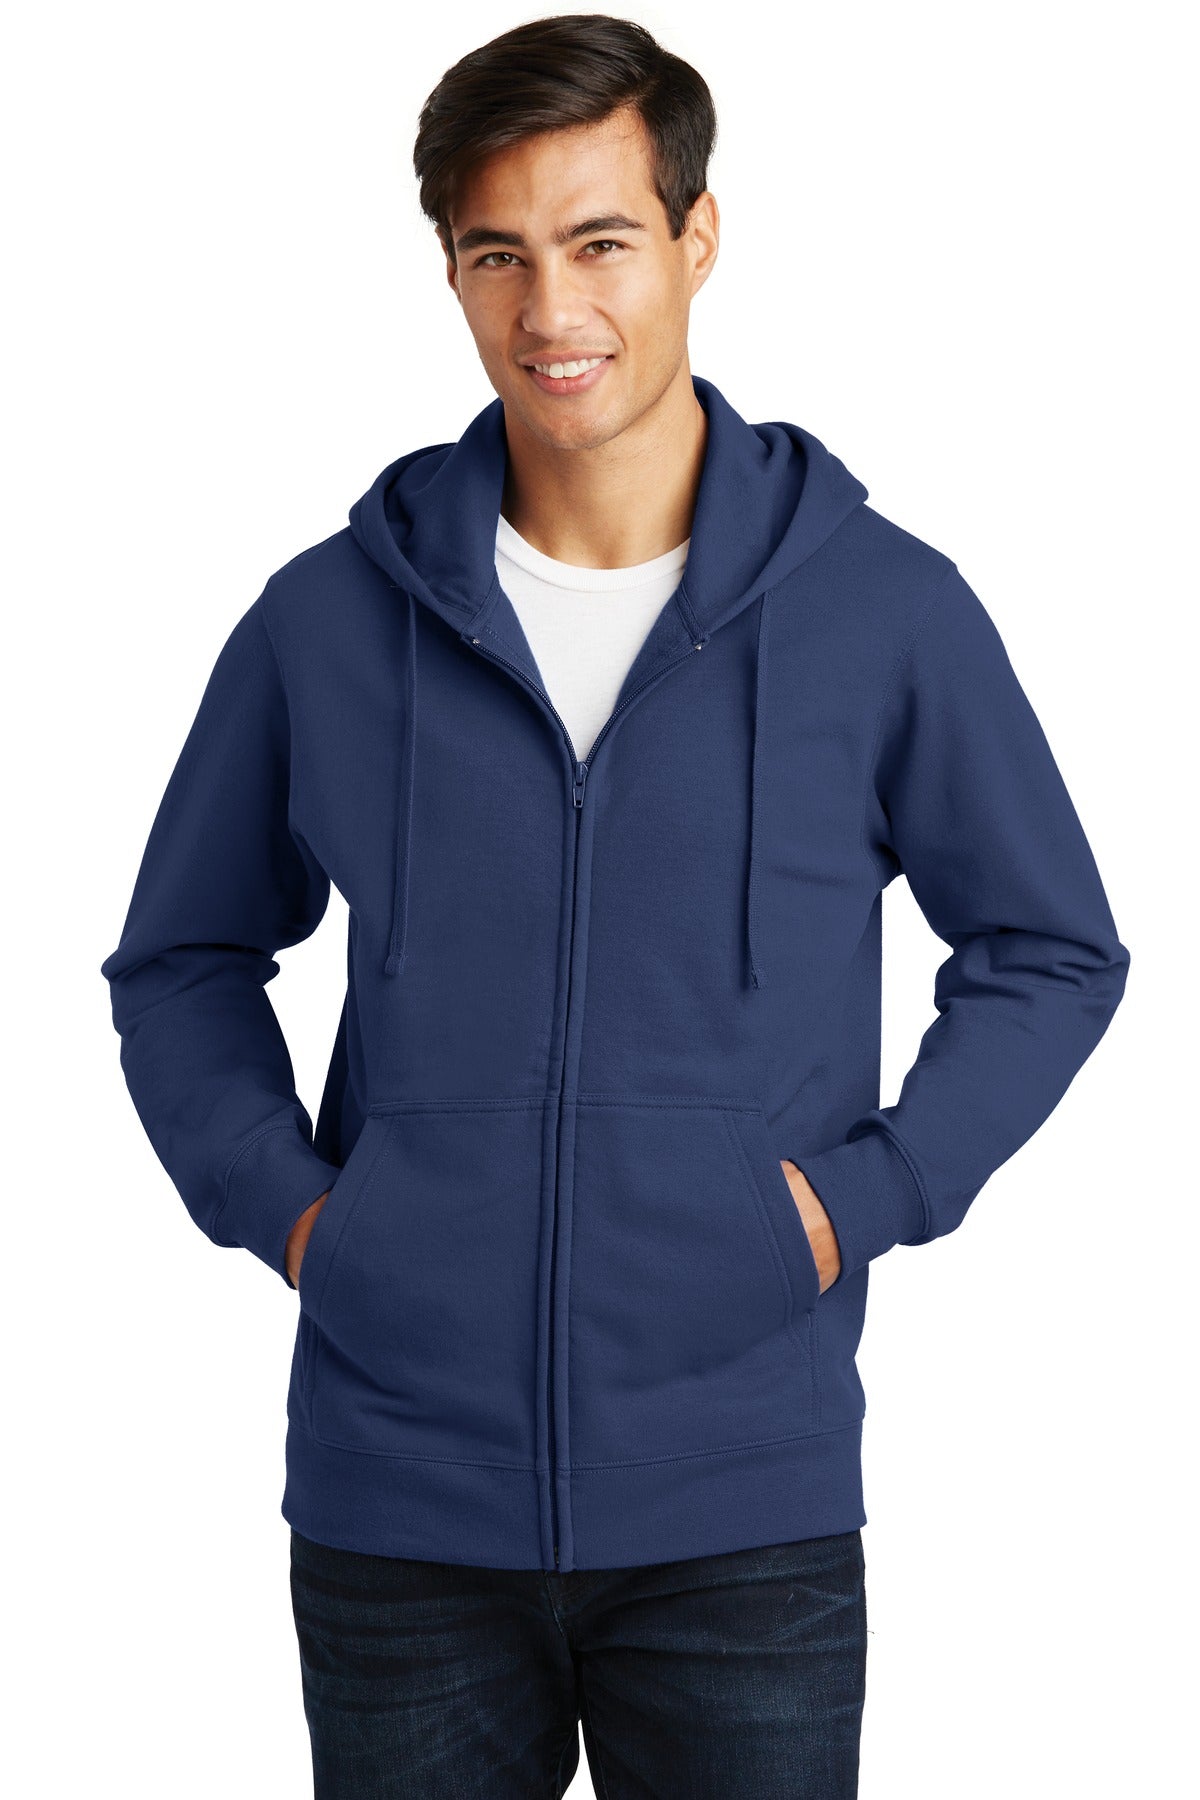 Sweatshirts/Fleece Team Navy Port & Company